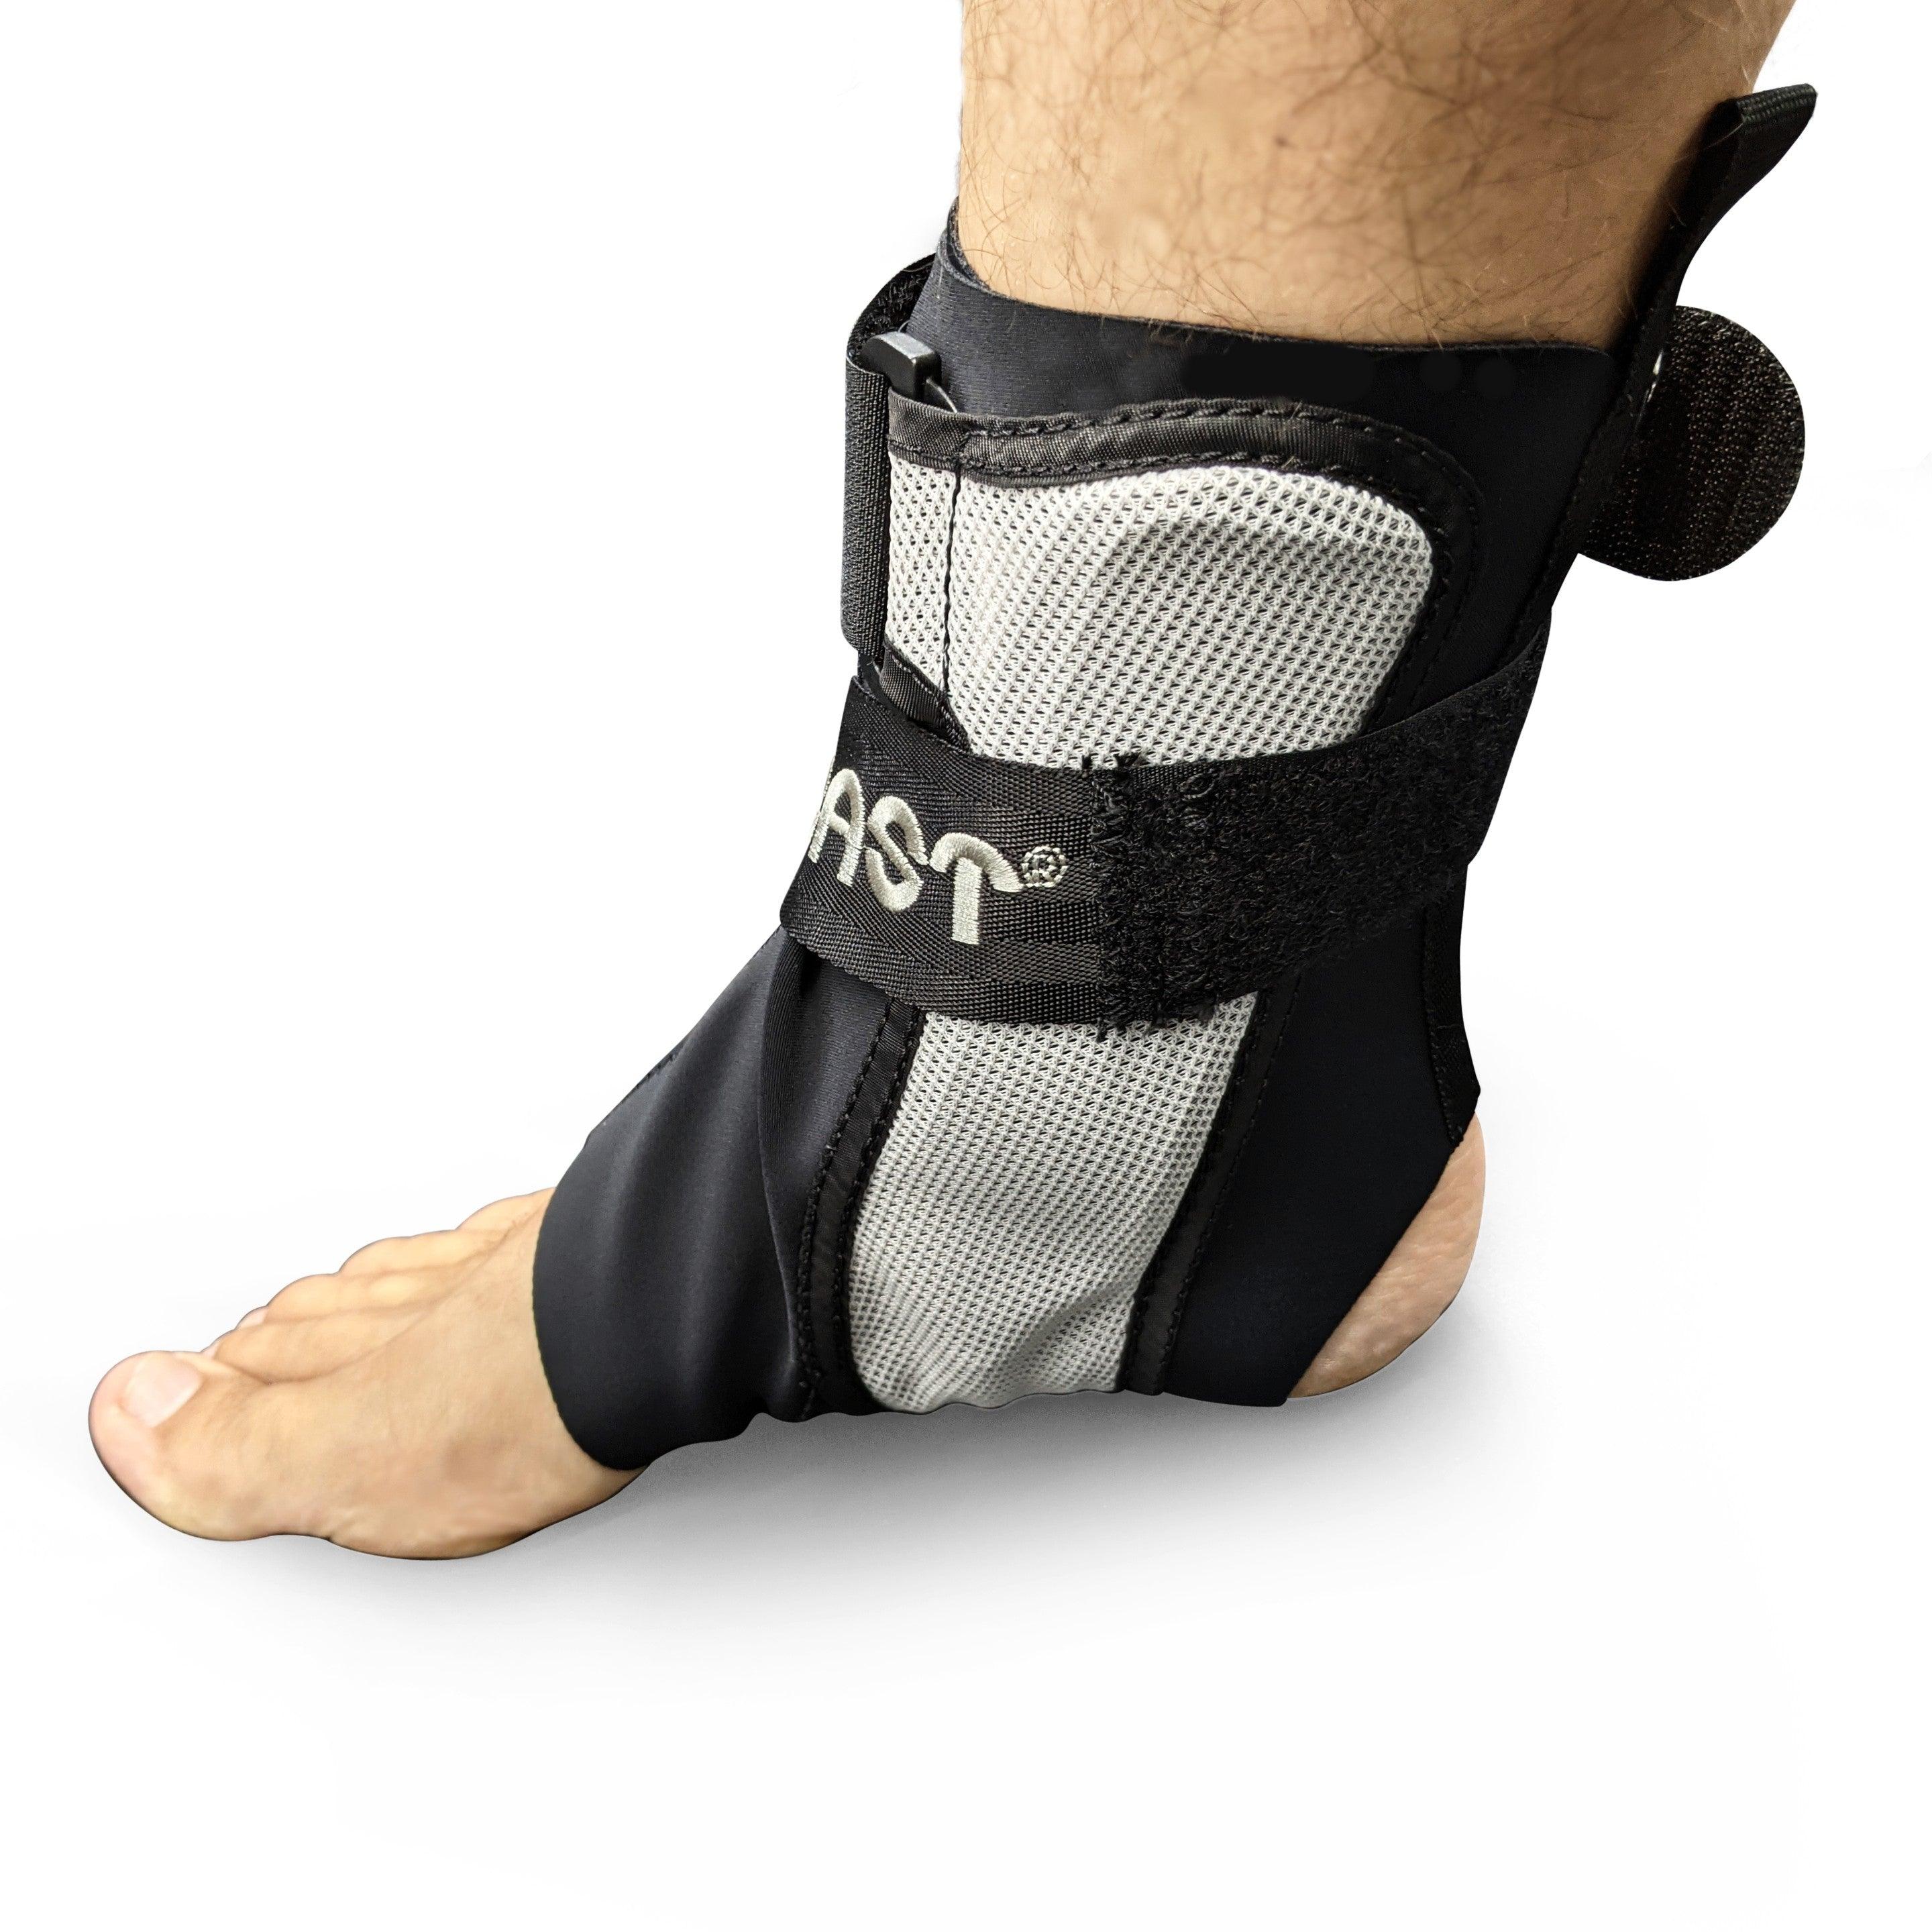 Aircast® A60 Ankle Support Brace - 02TSL Aircast® A60 Ankle Support Brace - undefined by Supply Physical Therapy Aircast, Ankle, Ankle Brace, Foot and Ankle